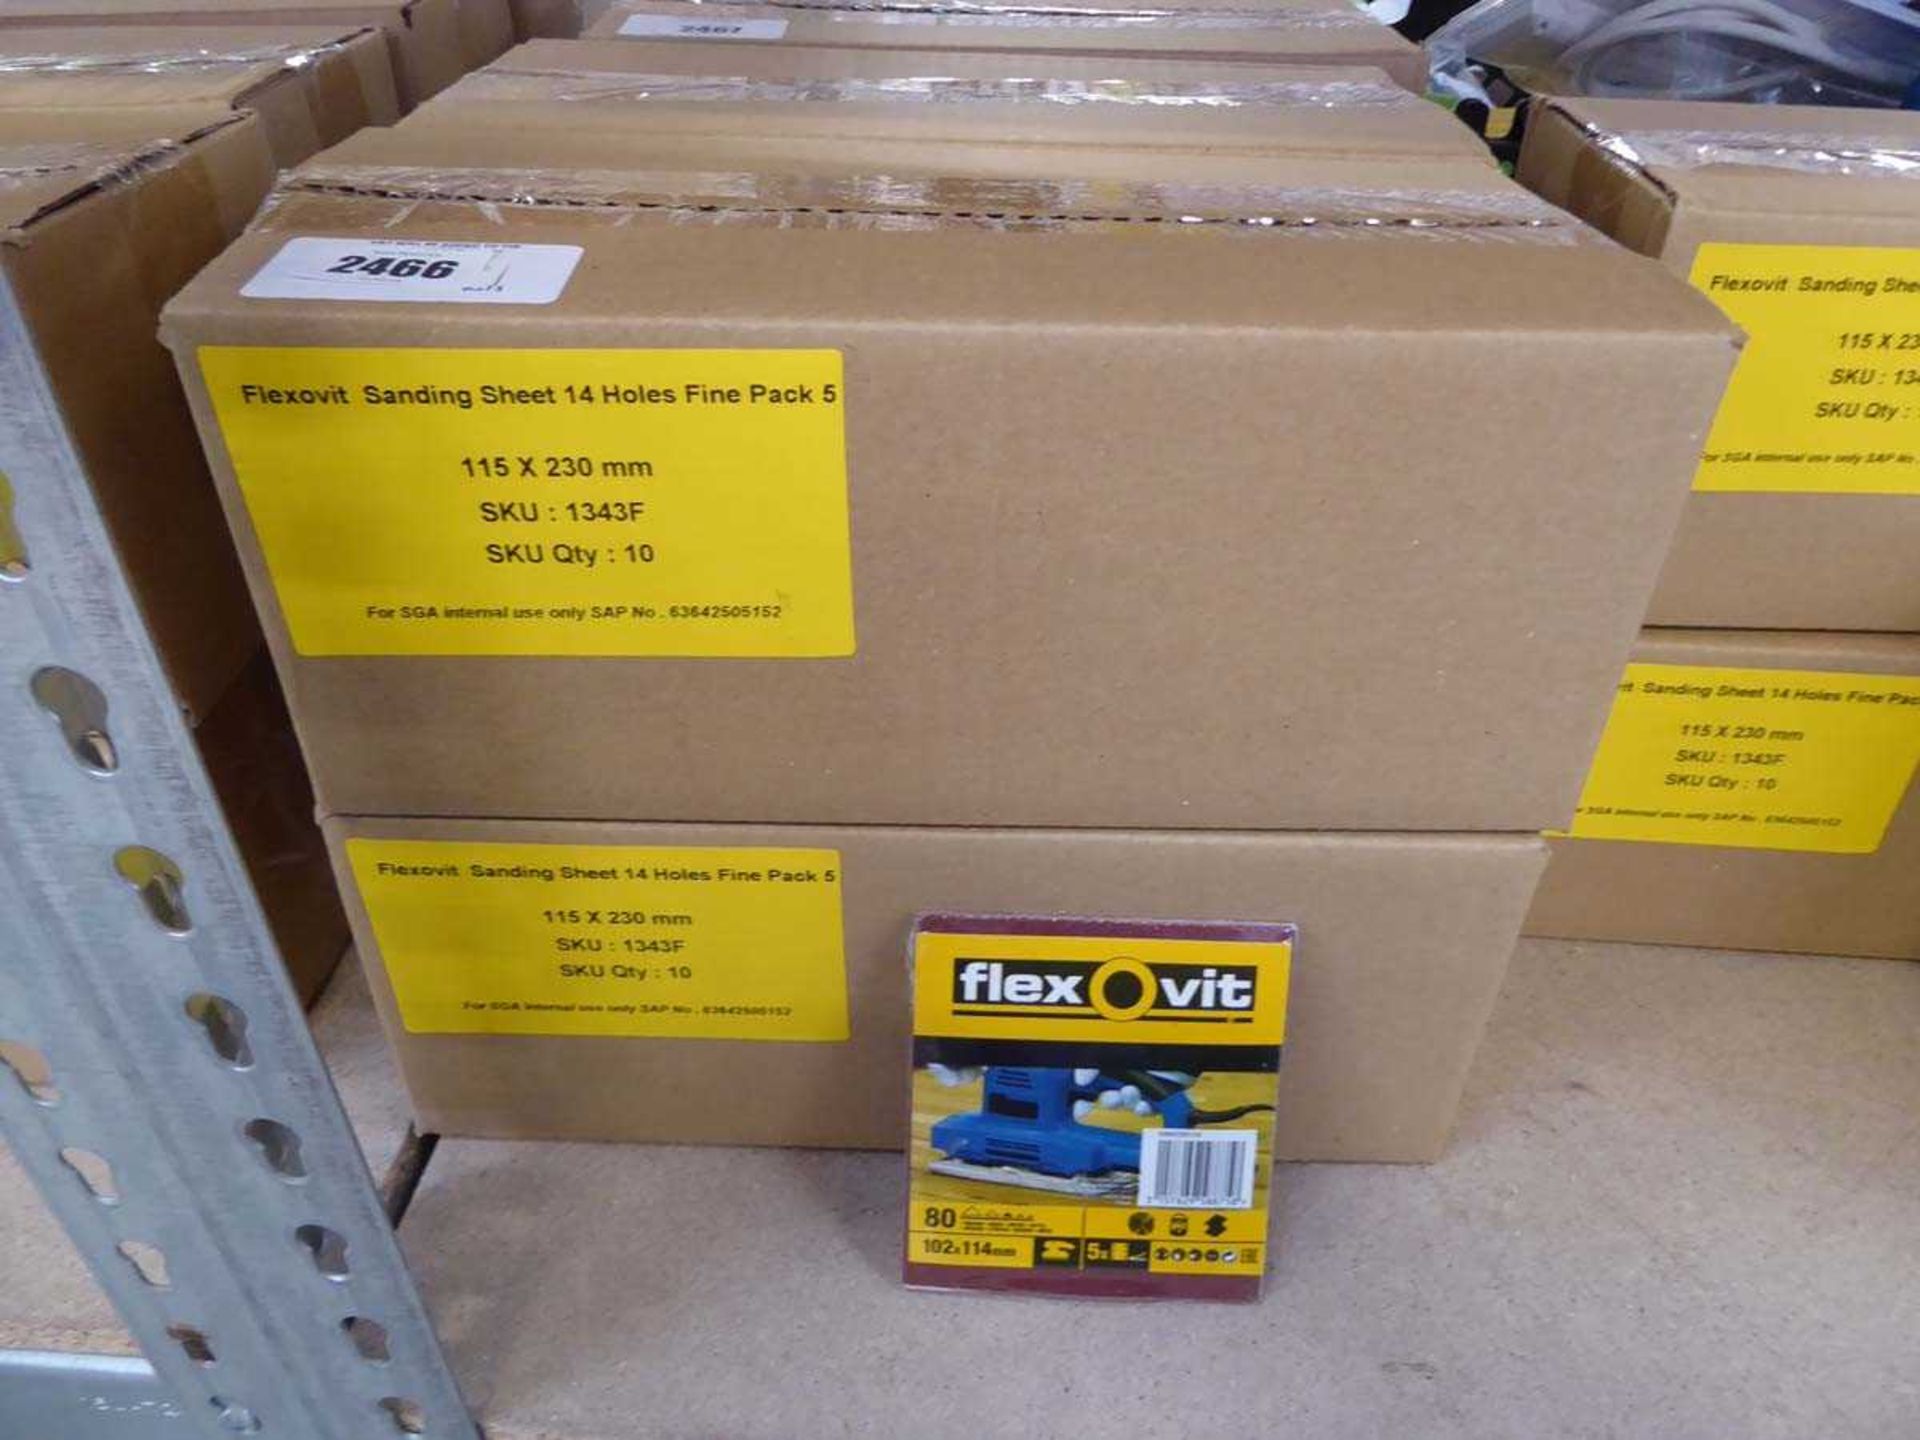 +VAT 4 boxes containing 10 multipacks of 5 Flexovit 14 hole fine sanding sheets - Image 2 of 2